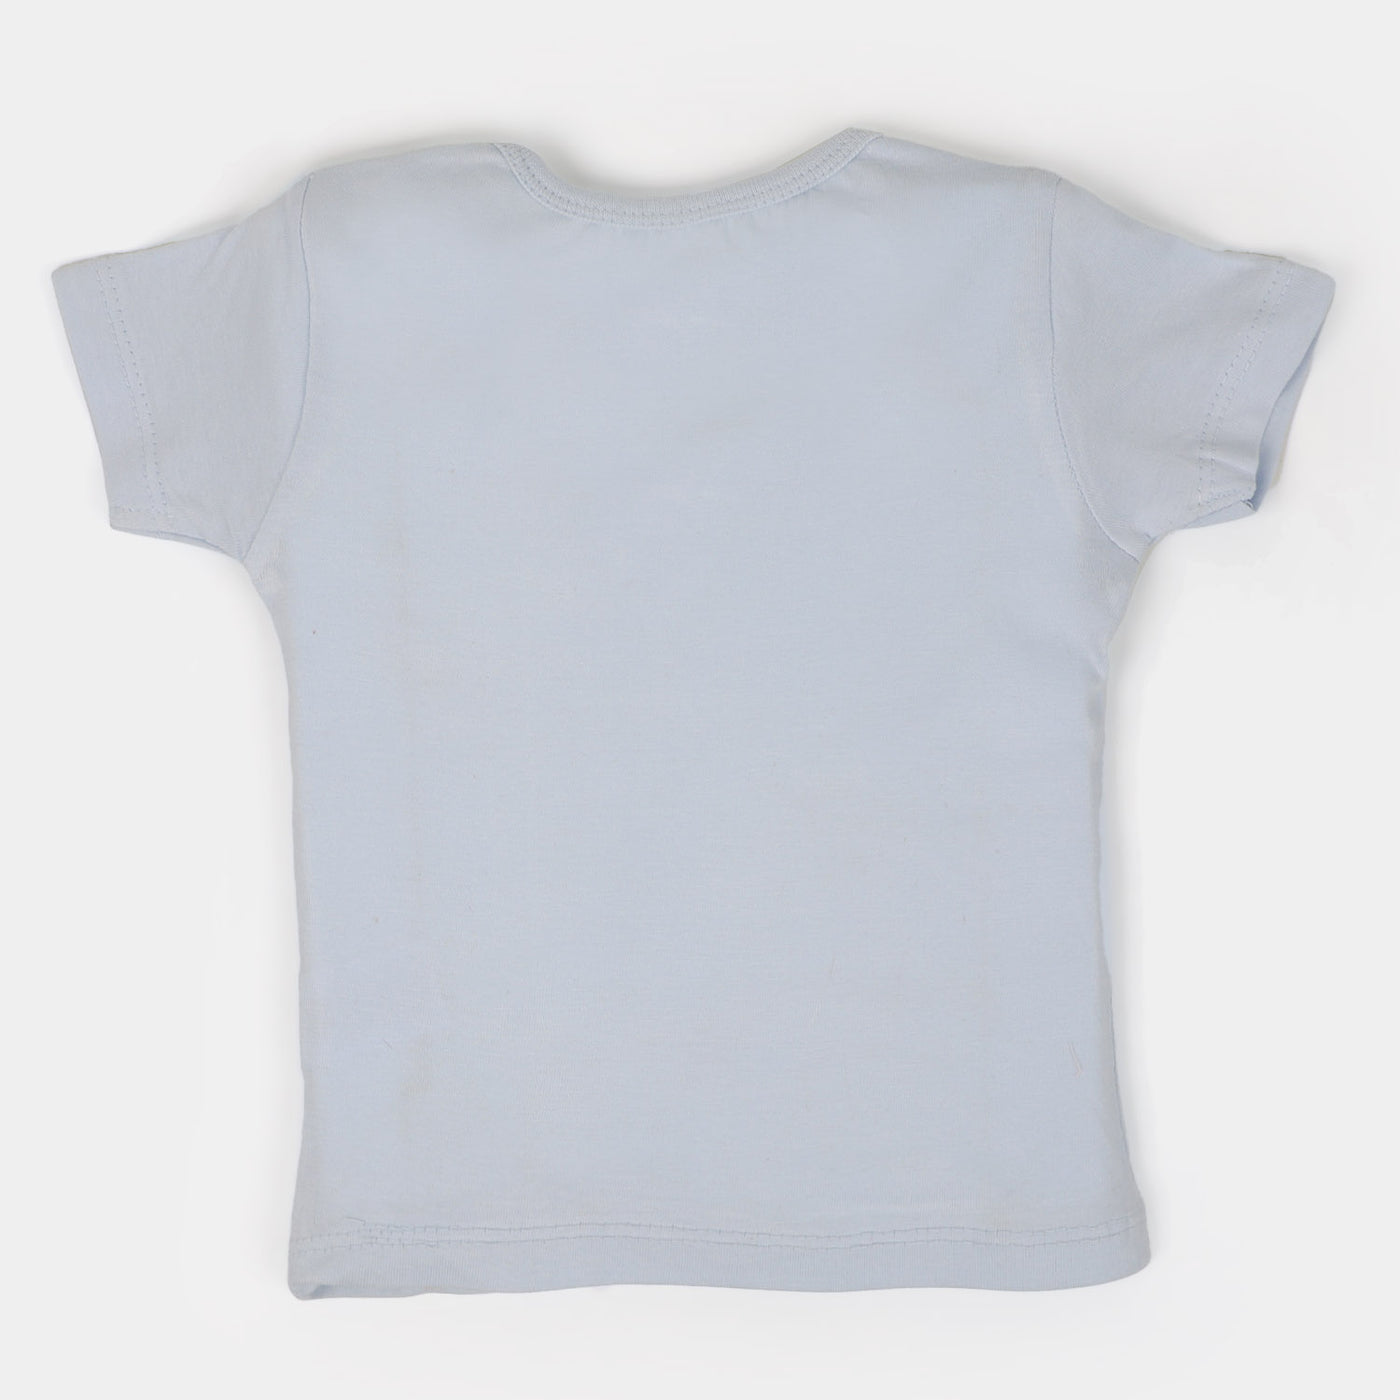 Infant Boys Cottont T-Shirt Character